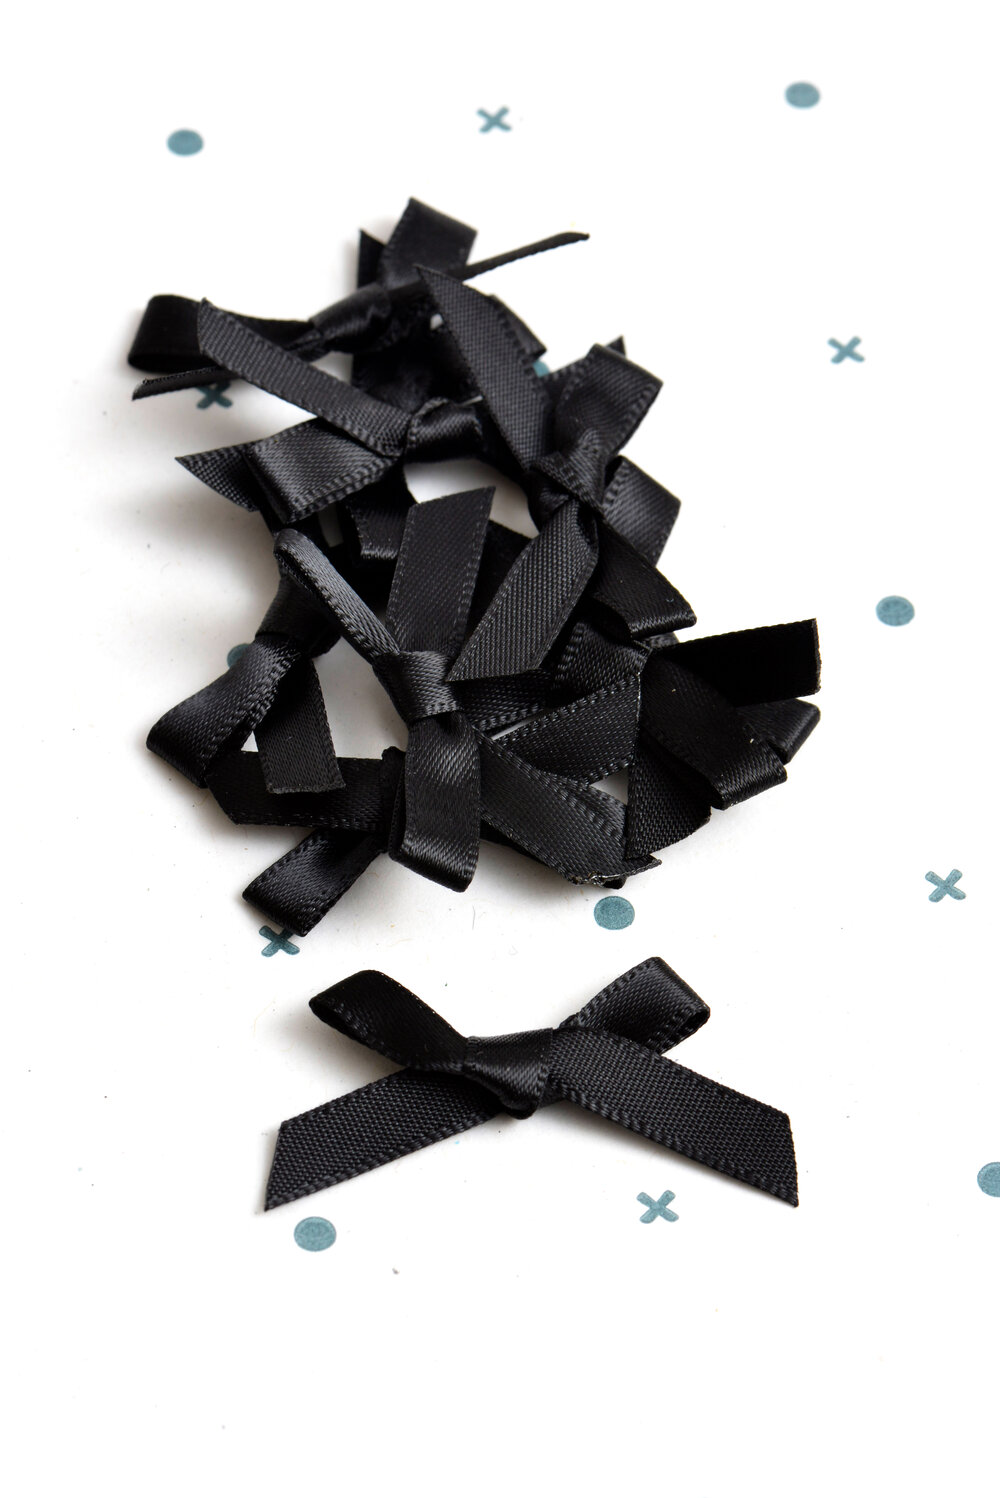 THE PAPER STUDIO La Petites Stickers 3D Black Silk Bows Black Ribbon Bows  8Pcs $5.00 - PicClick